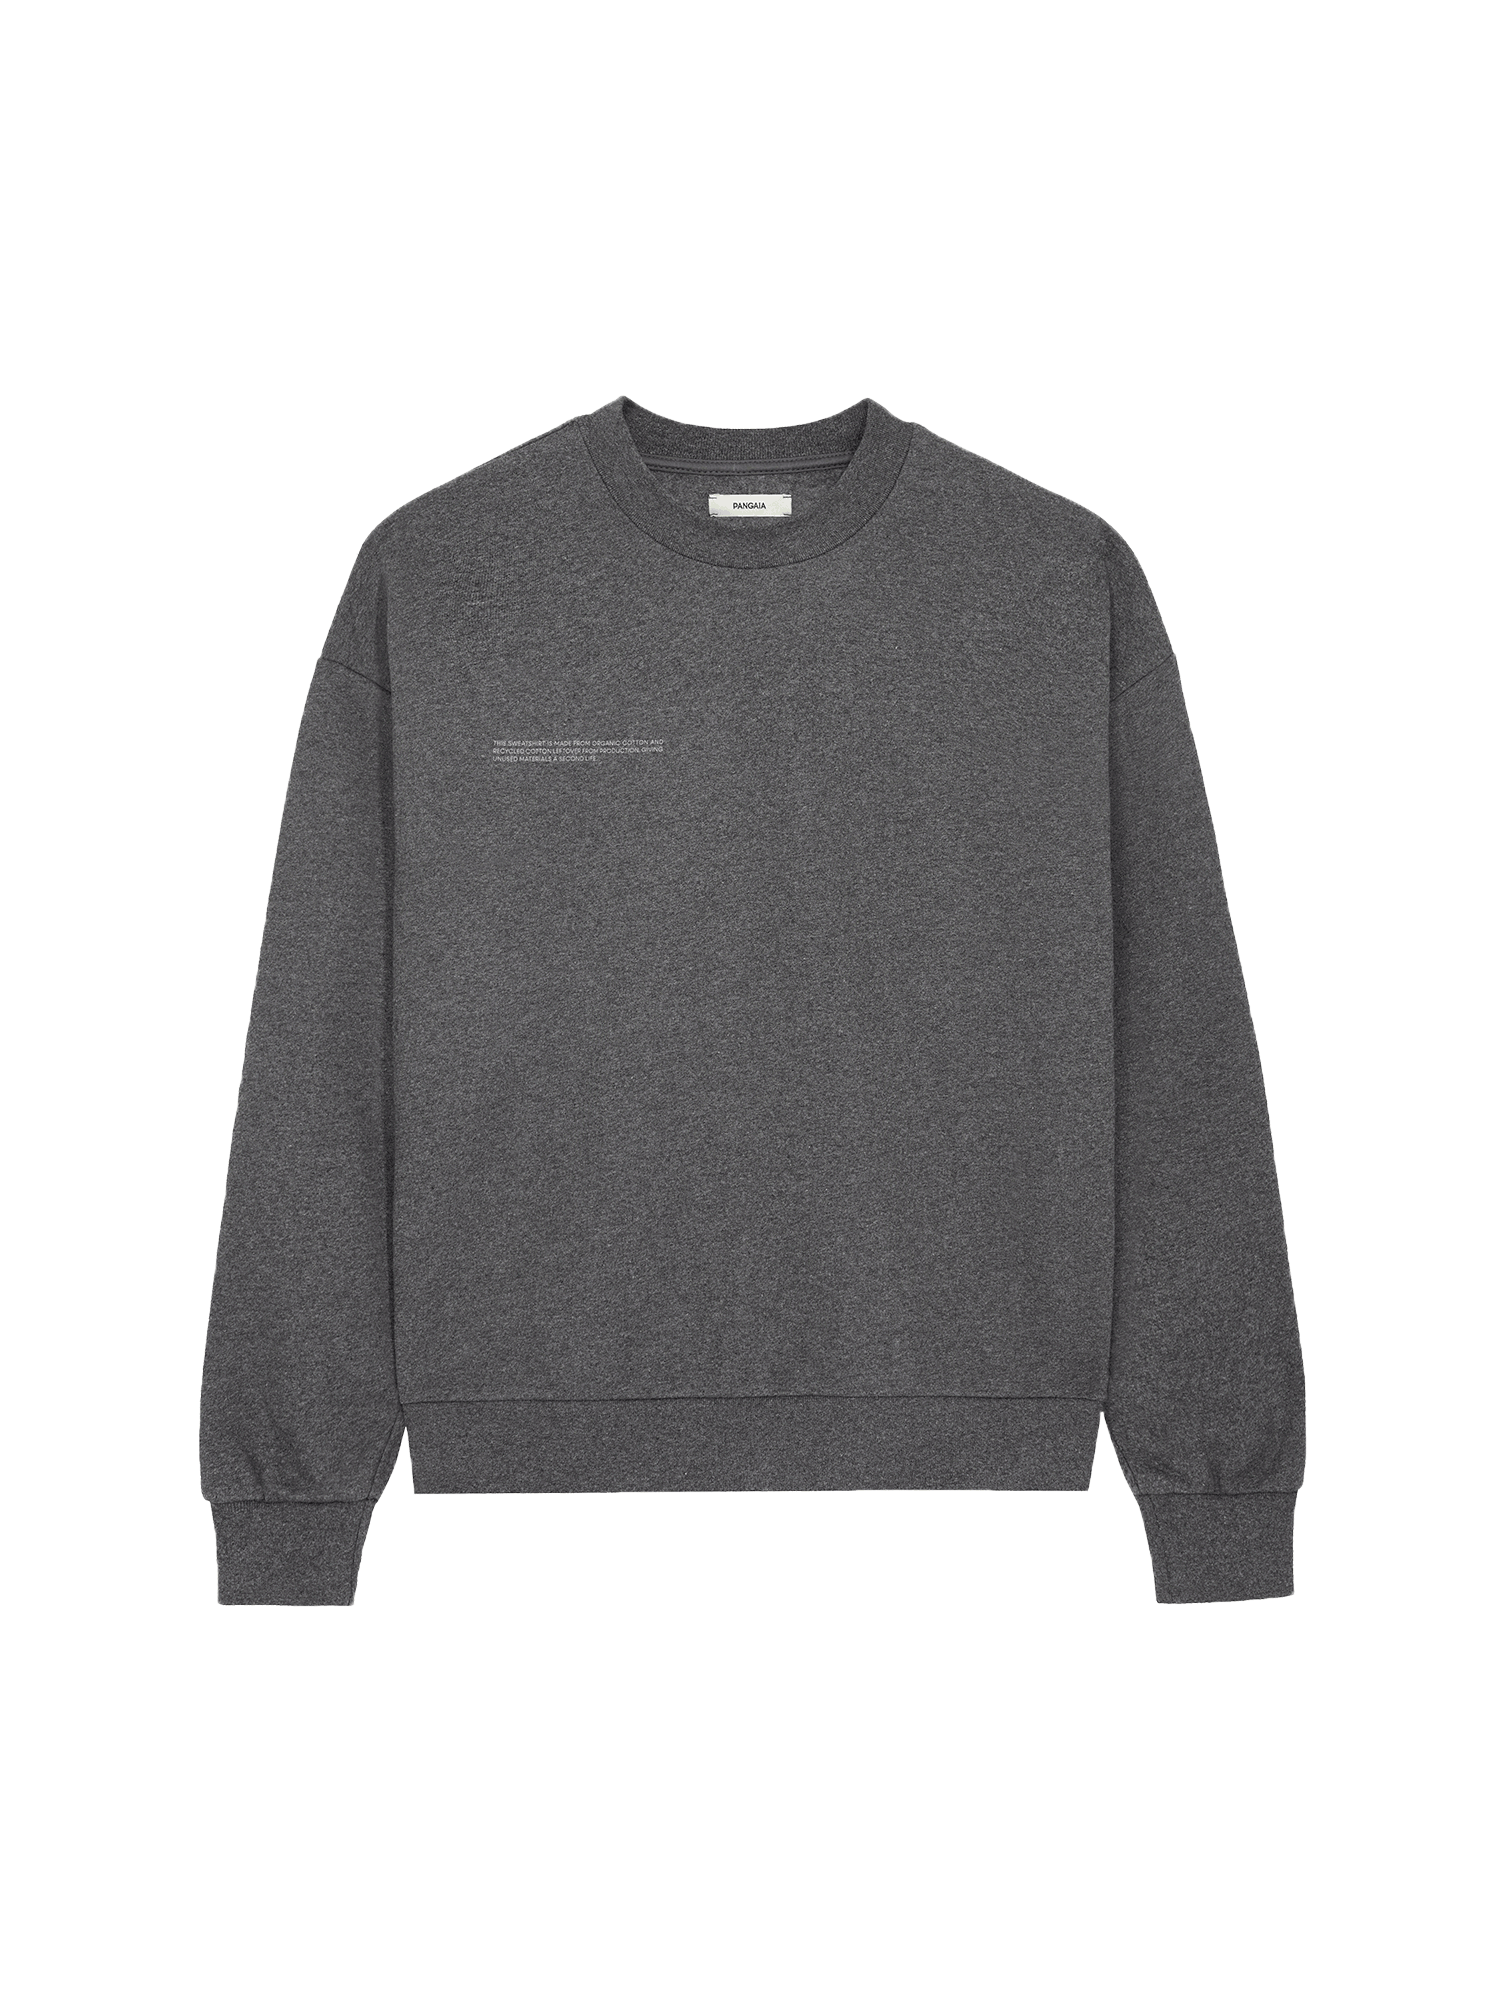 Reclaimed Cotton Sweatshirt—reclaim charcoal